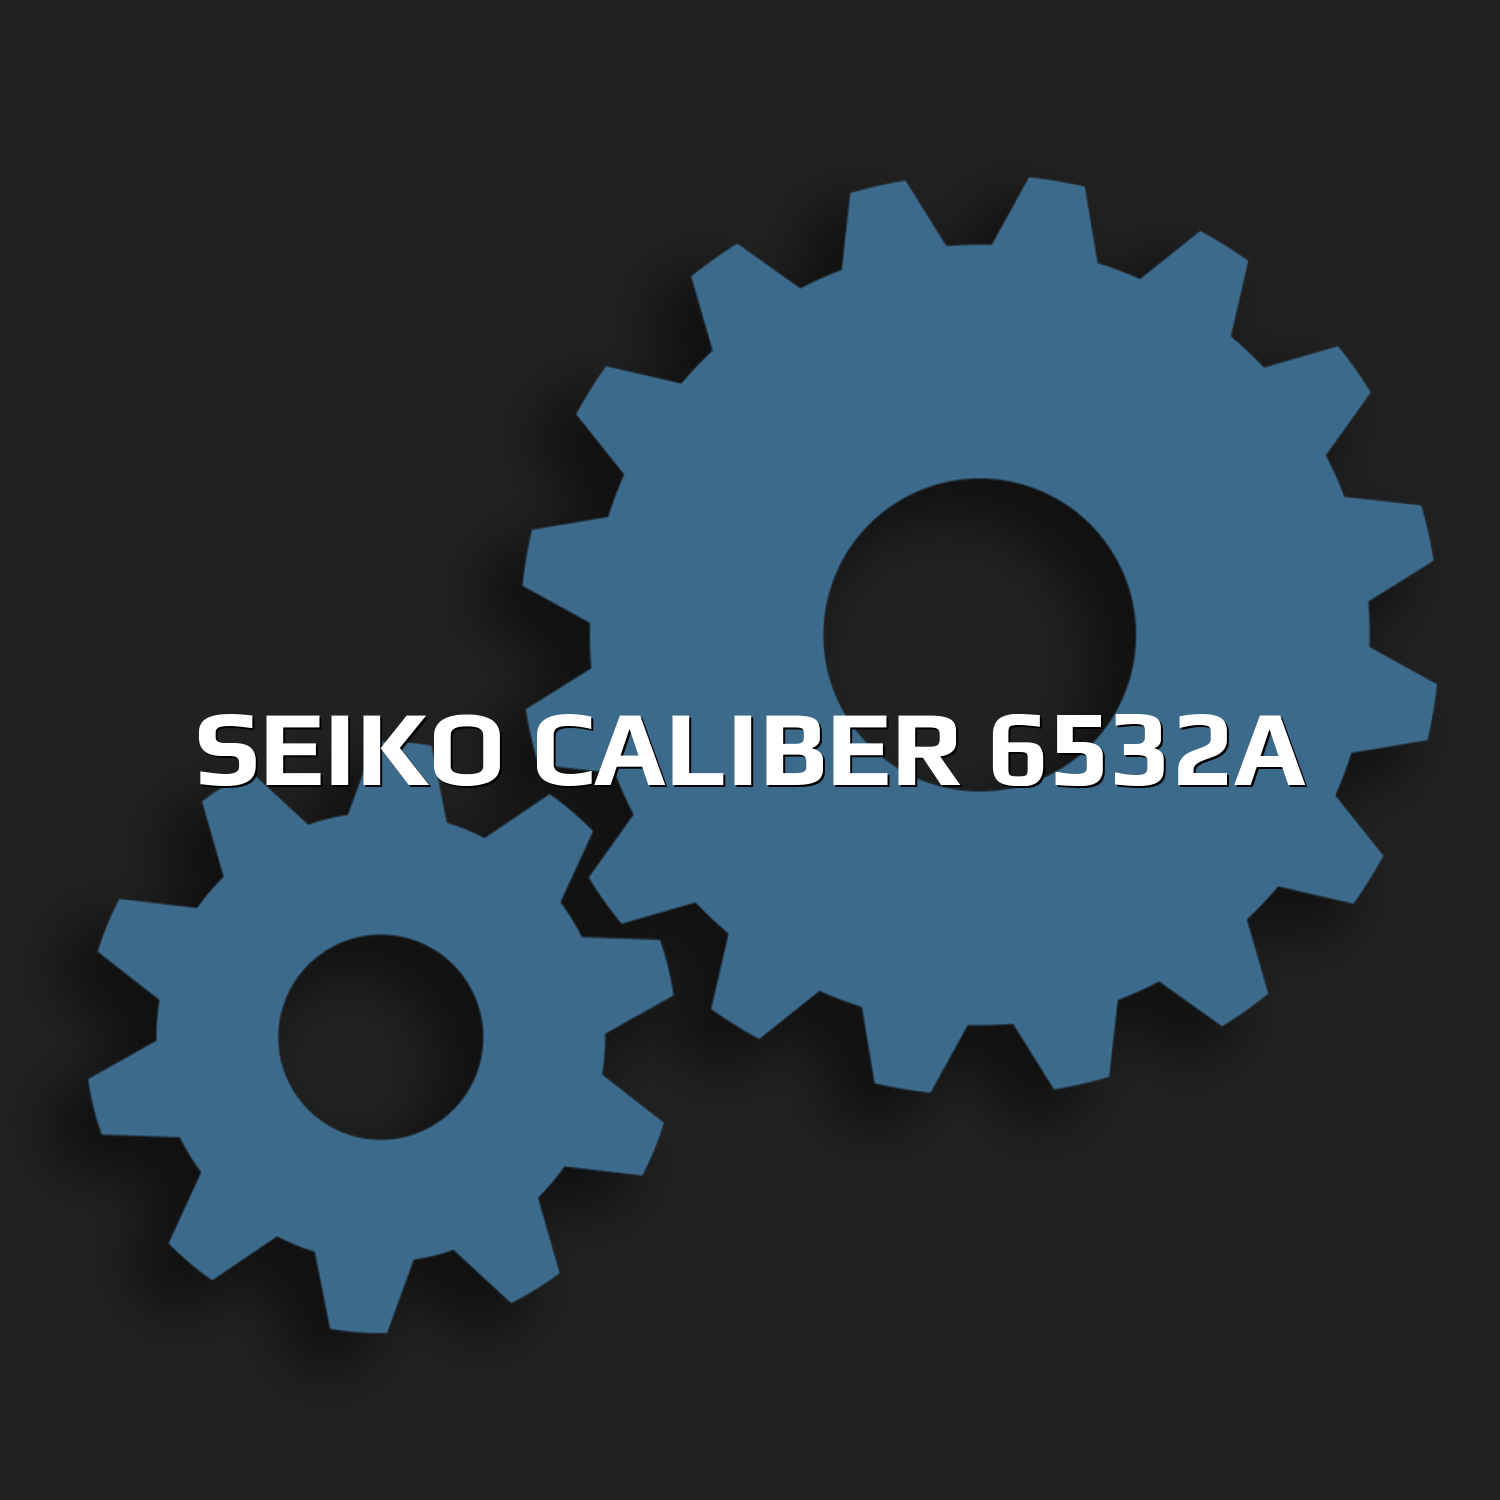 Seiko Caliber 6532A